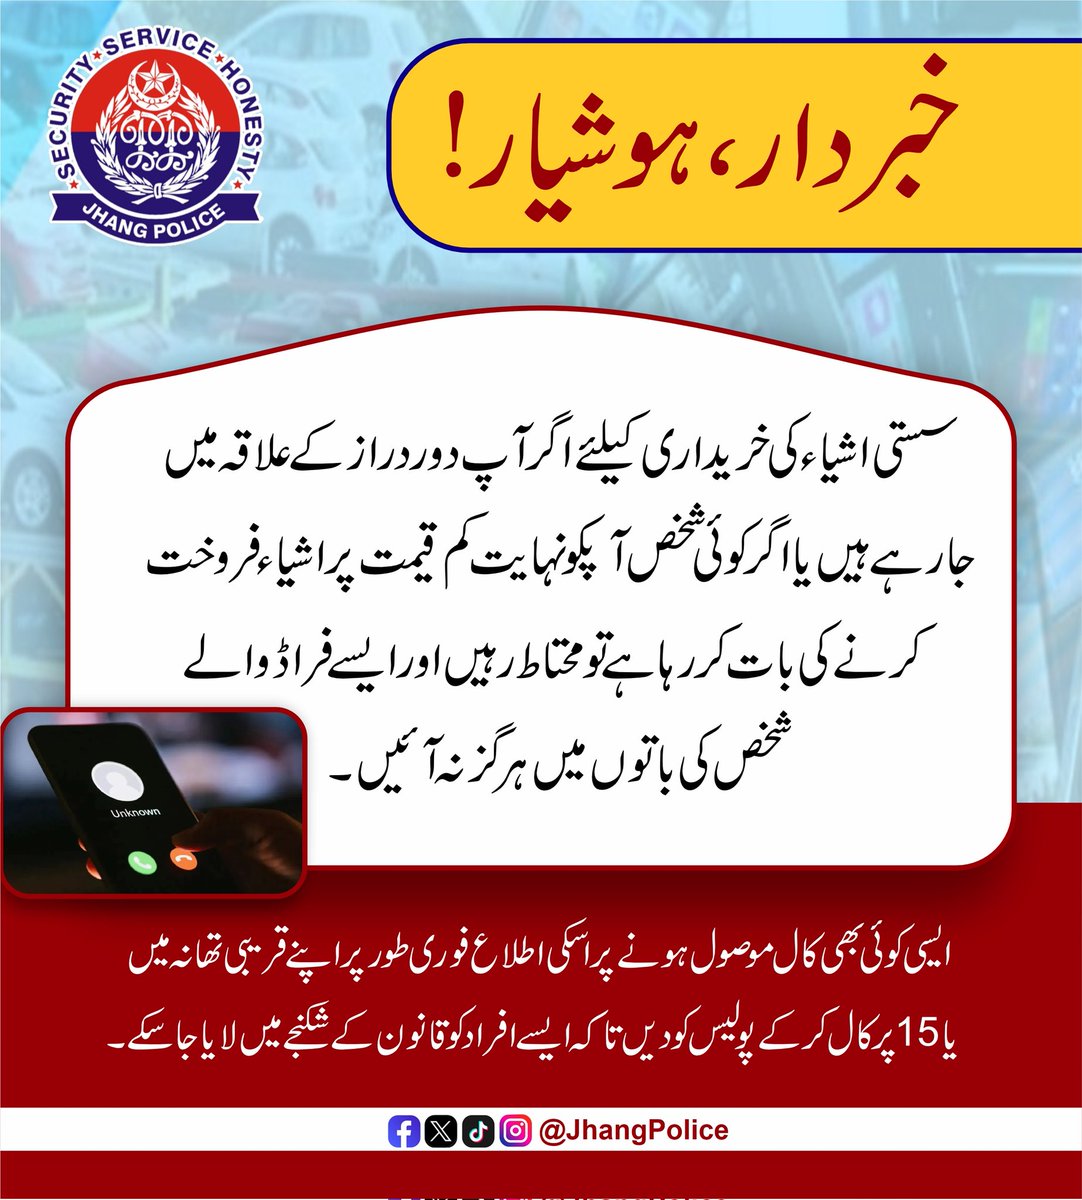 #Awareness #OpenCourt #CrimeFreeJhang #JhangPolice  #Service #Security #IGP #PunjabPolice